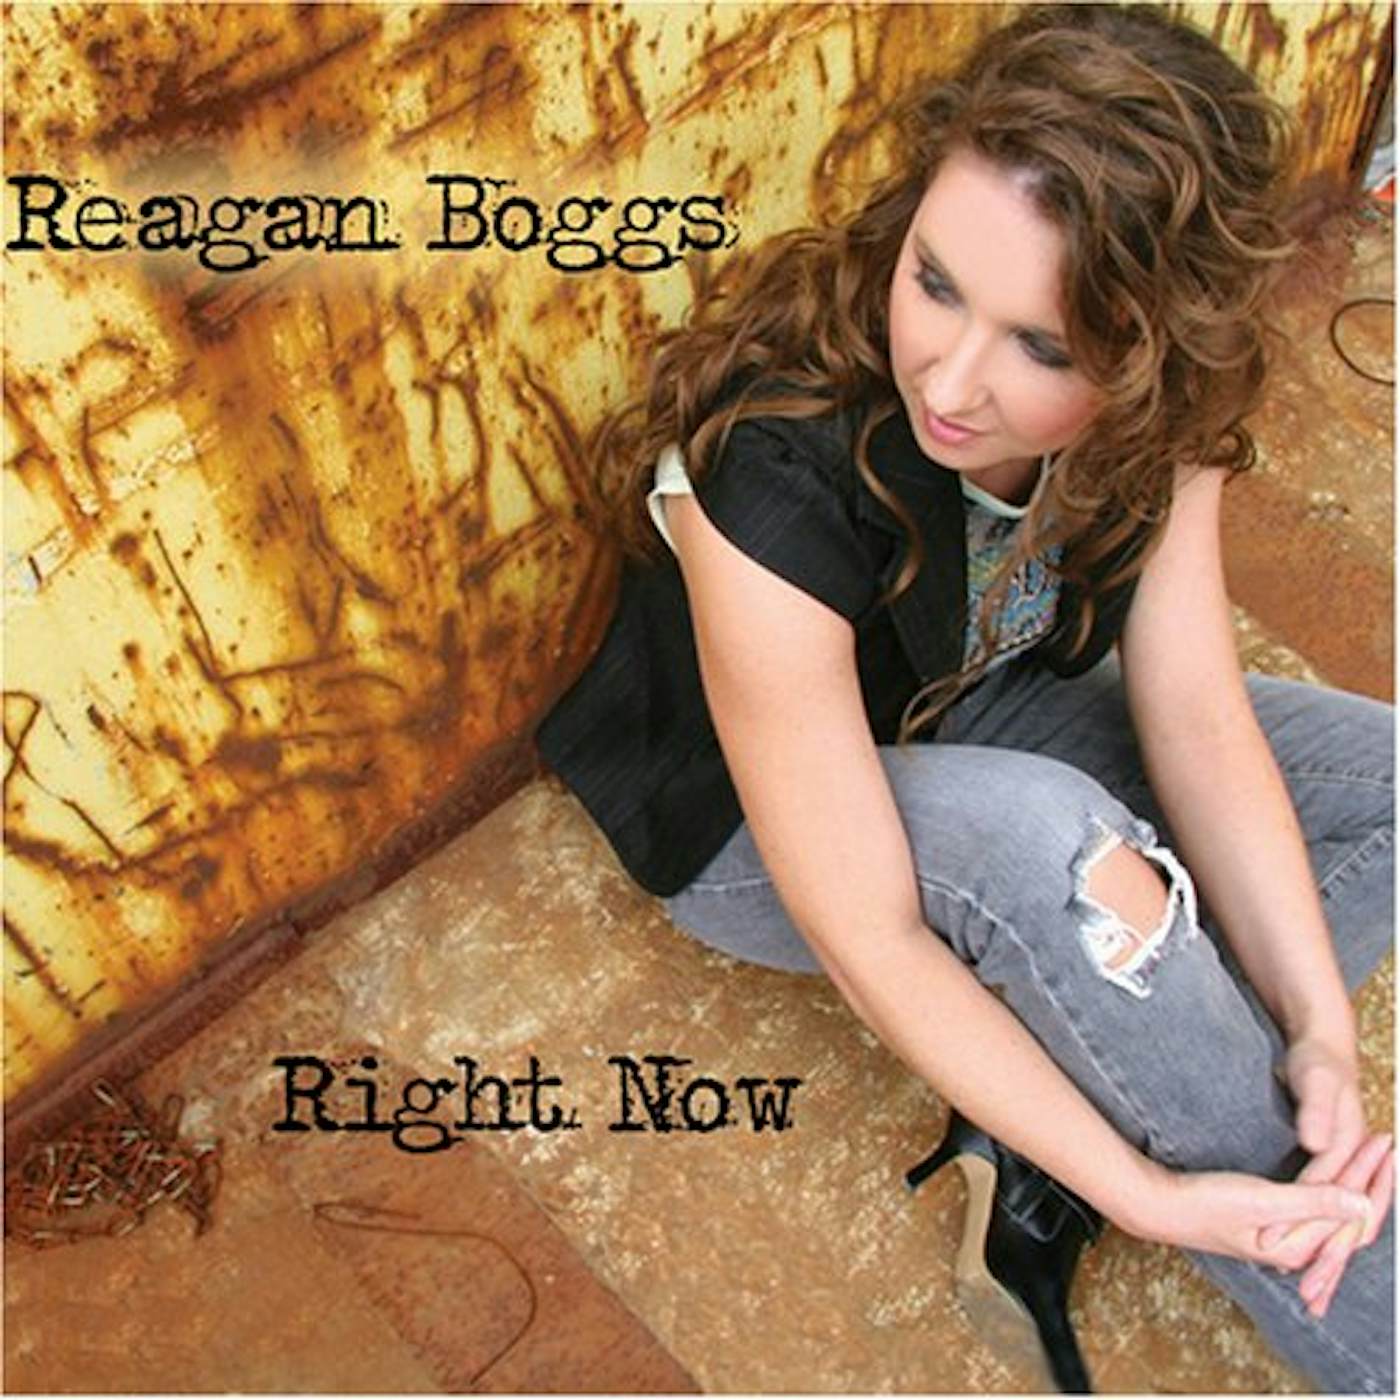 Reagan Boggs RIGHT NOW CD